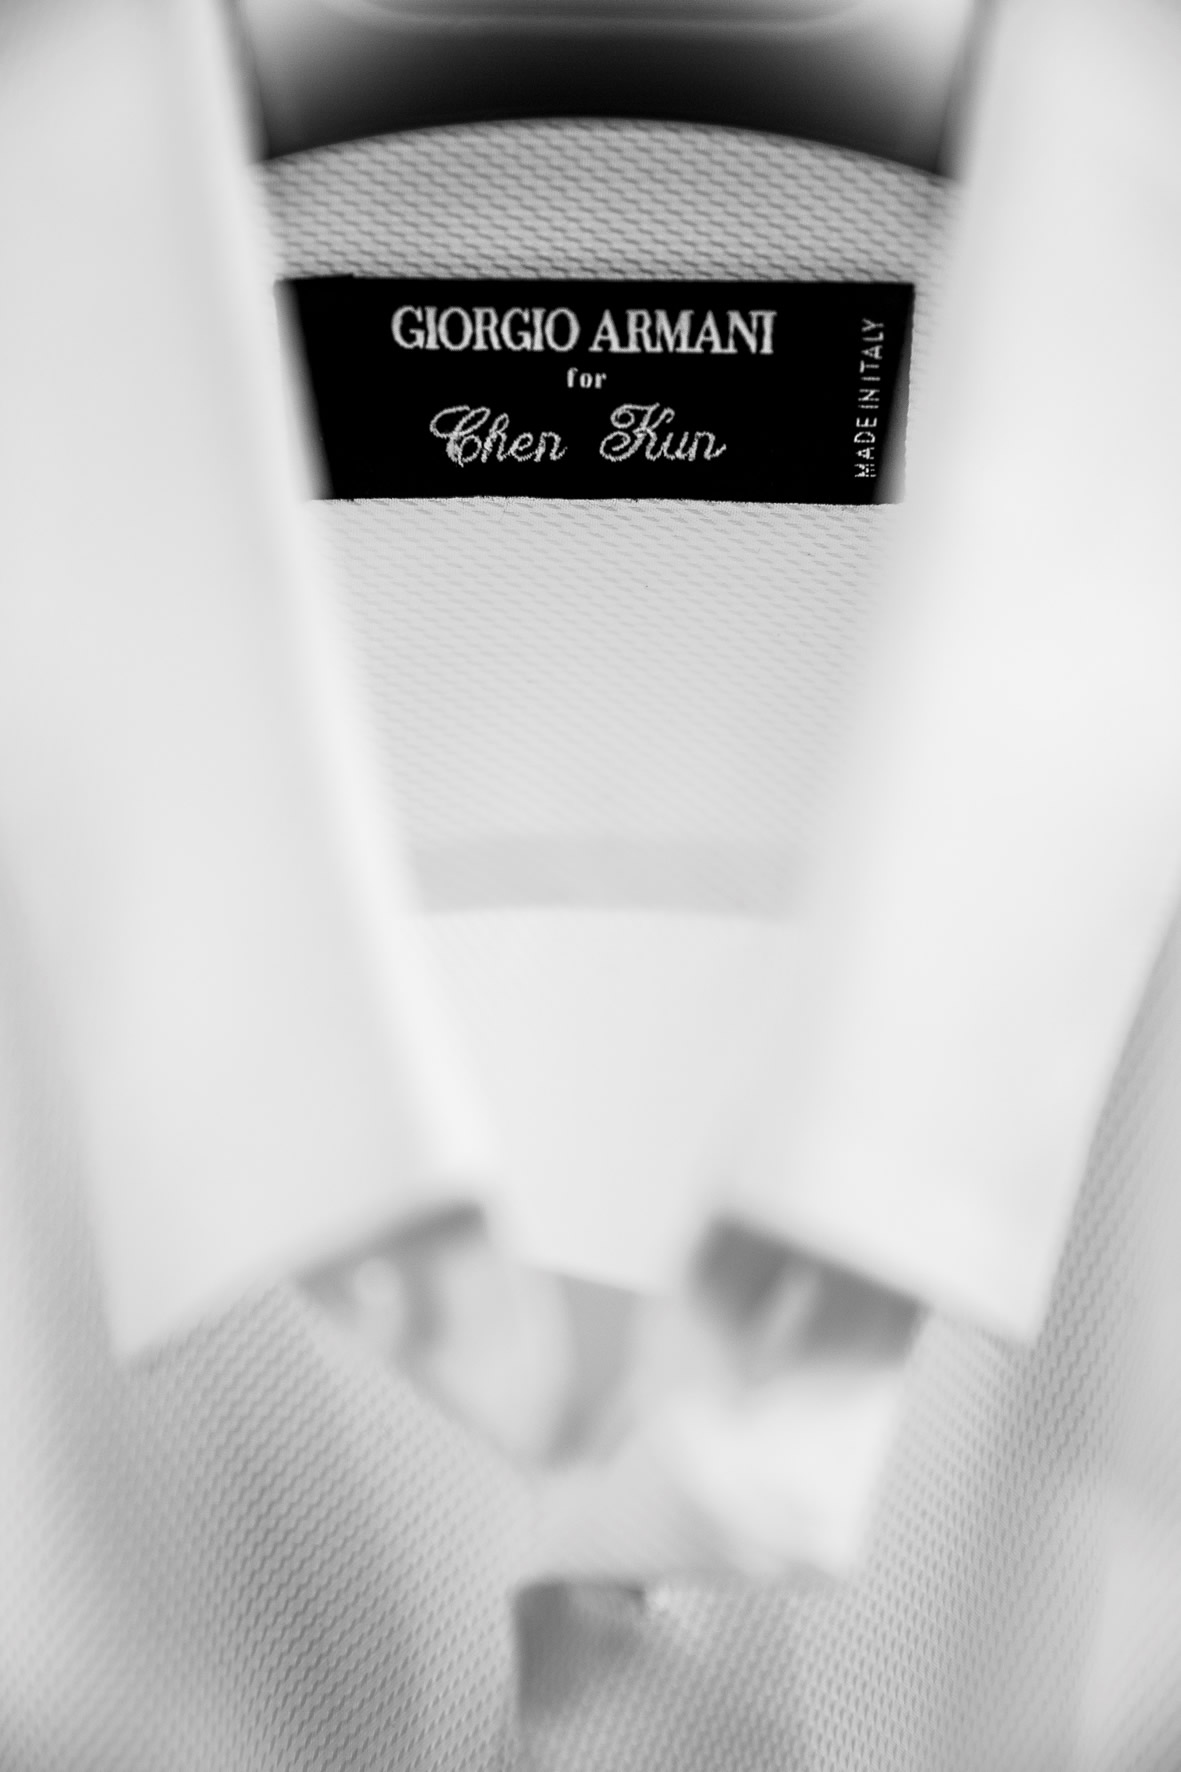 Giorgio Armani Made to Measure量身定制系列专为追求完美的男性顾客而定制，满足其高端需求及对独特服饰细节的需求, 充分彰显个人品味，兼具Armani美学中典型的流畅和自然特质。通过参与制作过程，顾客将有机会专享个性奢华体验。最终服饰完全按照顾客的特定要求而打造，独一无二、别具一格；并彰显出无懈可击的着装风格和品味，令顾客在人群之中脱颖而出。